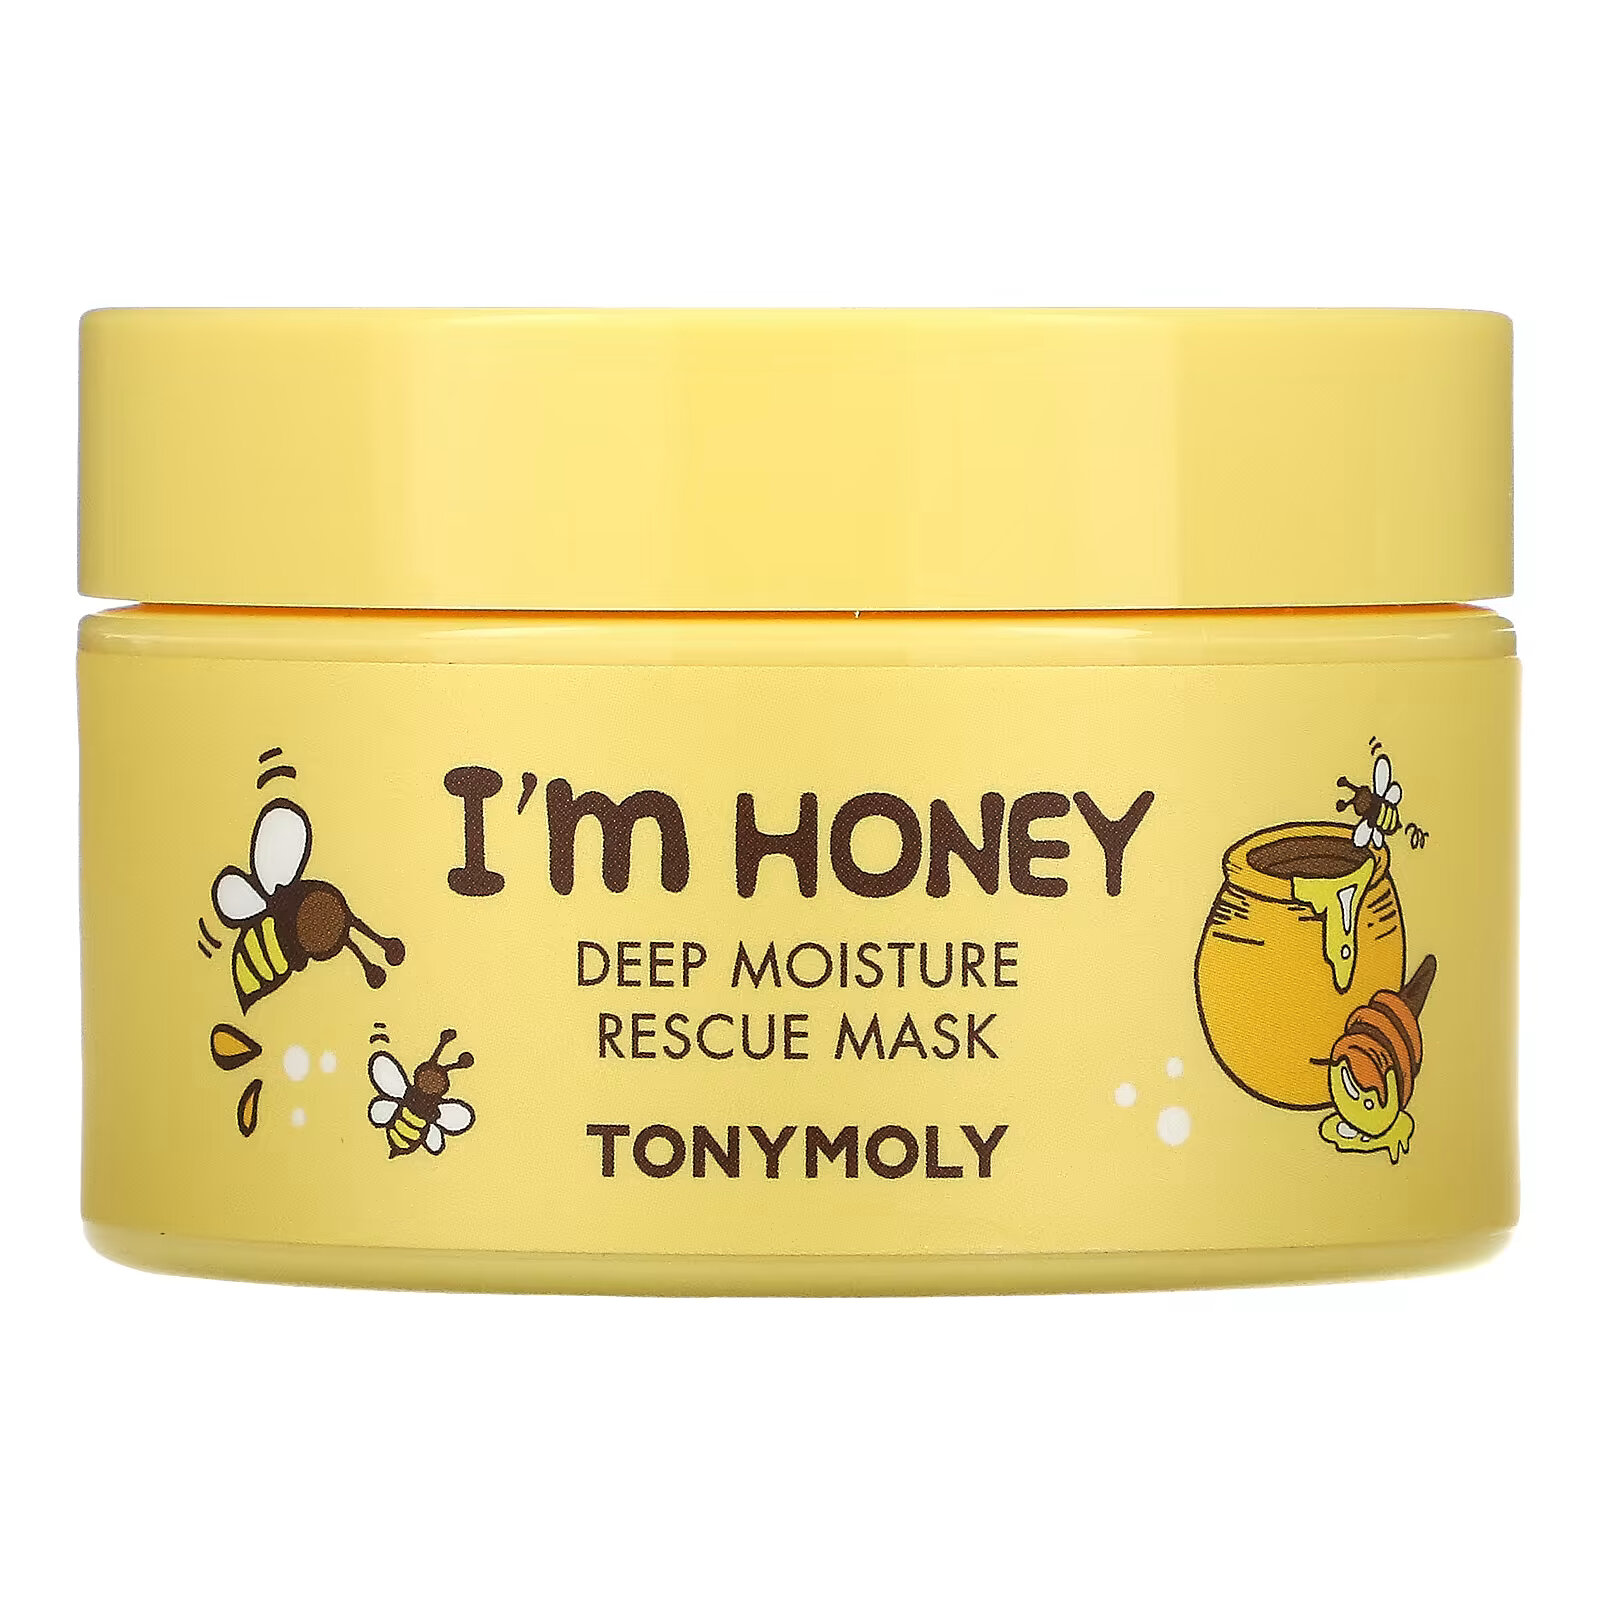 Tony Moly, I'm Honey, восстанавливающая маска для глубокого увлажнения, 100 г (3,52 унции) tony moly i m rose восстанавливающая маска для сна 3 52 унции 100 г